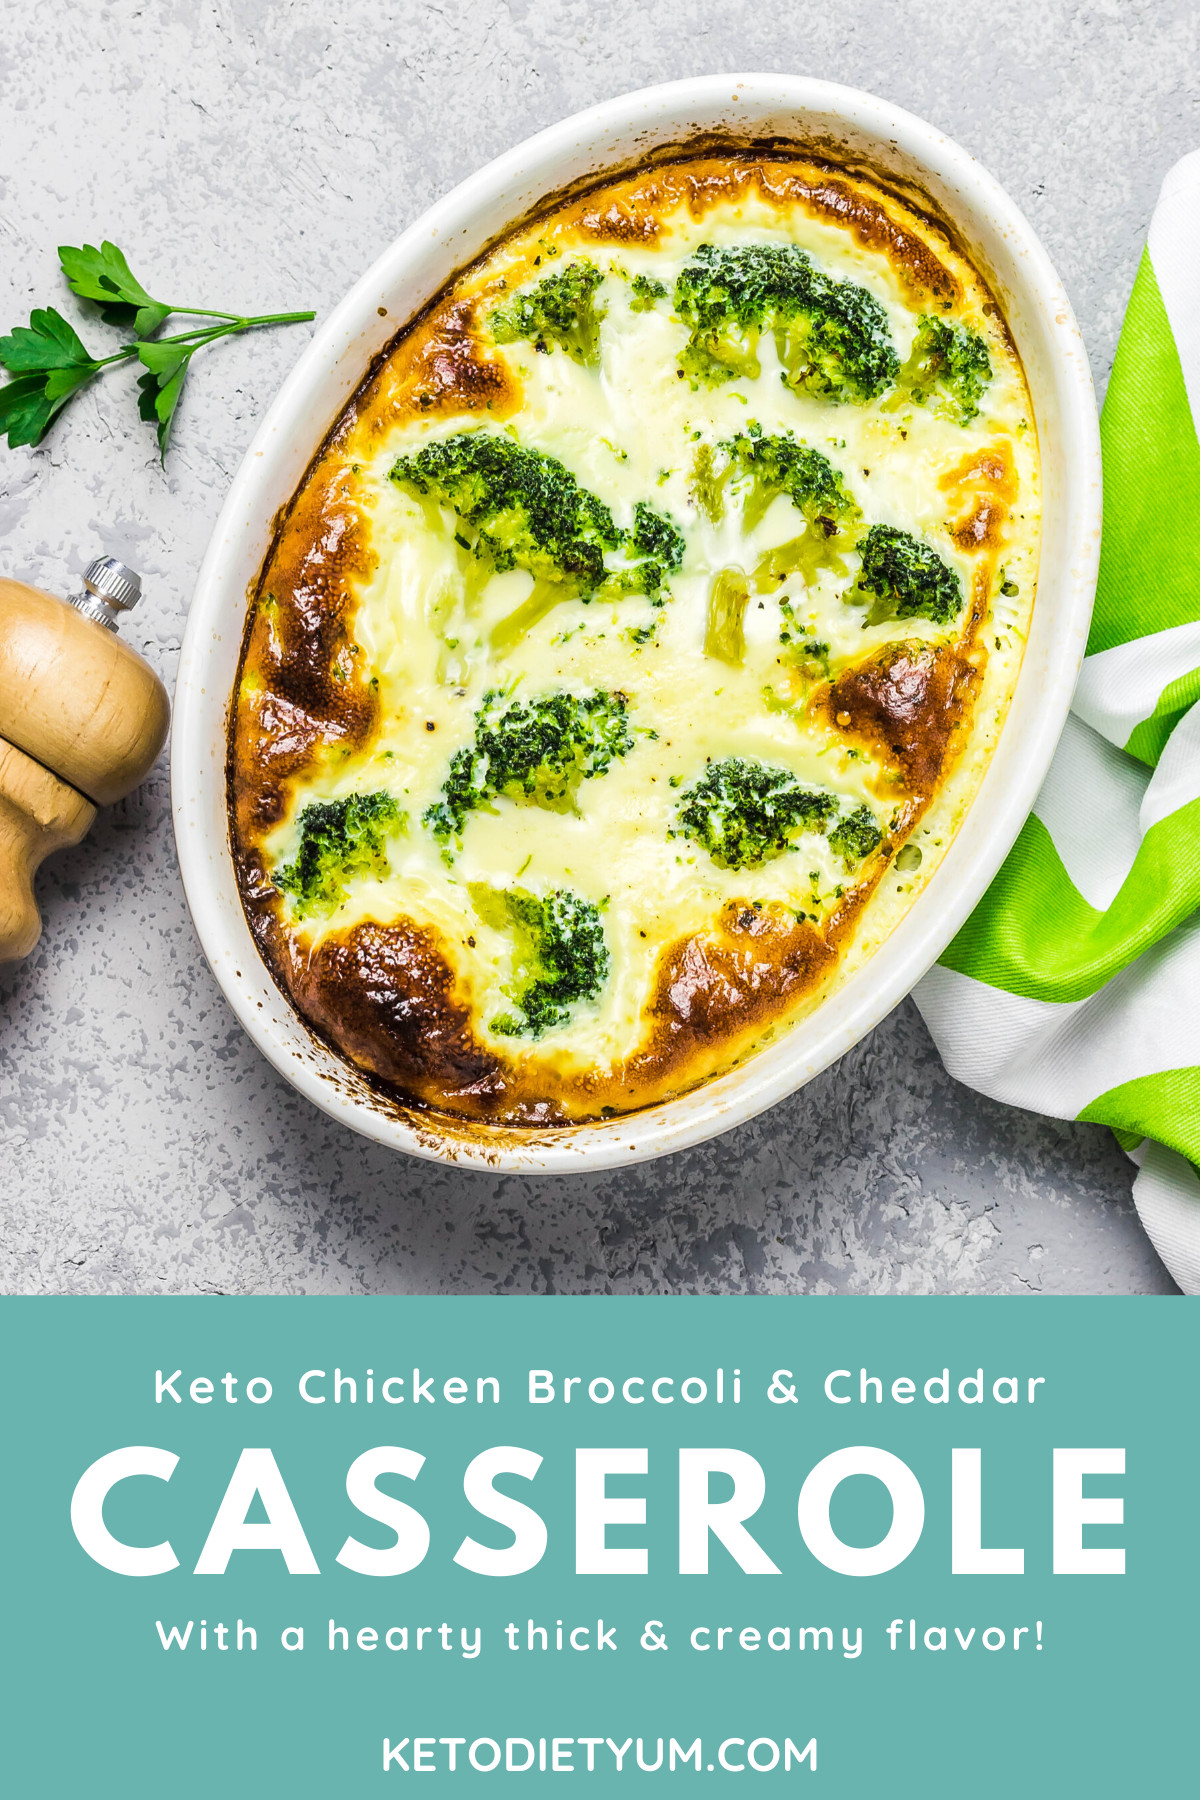 Vegetarian Keto Casserole Recipes
 Keto Chicken & Broccoli Casserole with Cheddar Topping